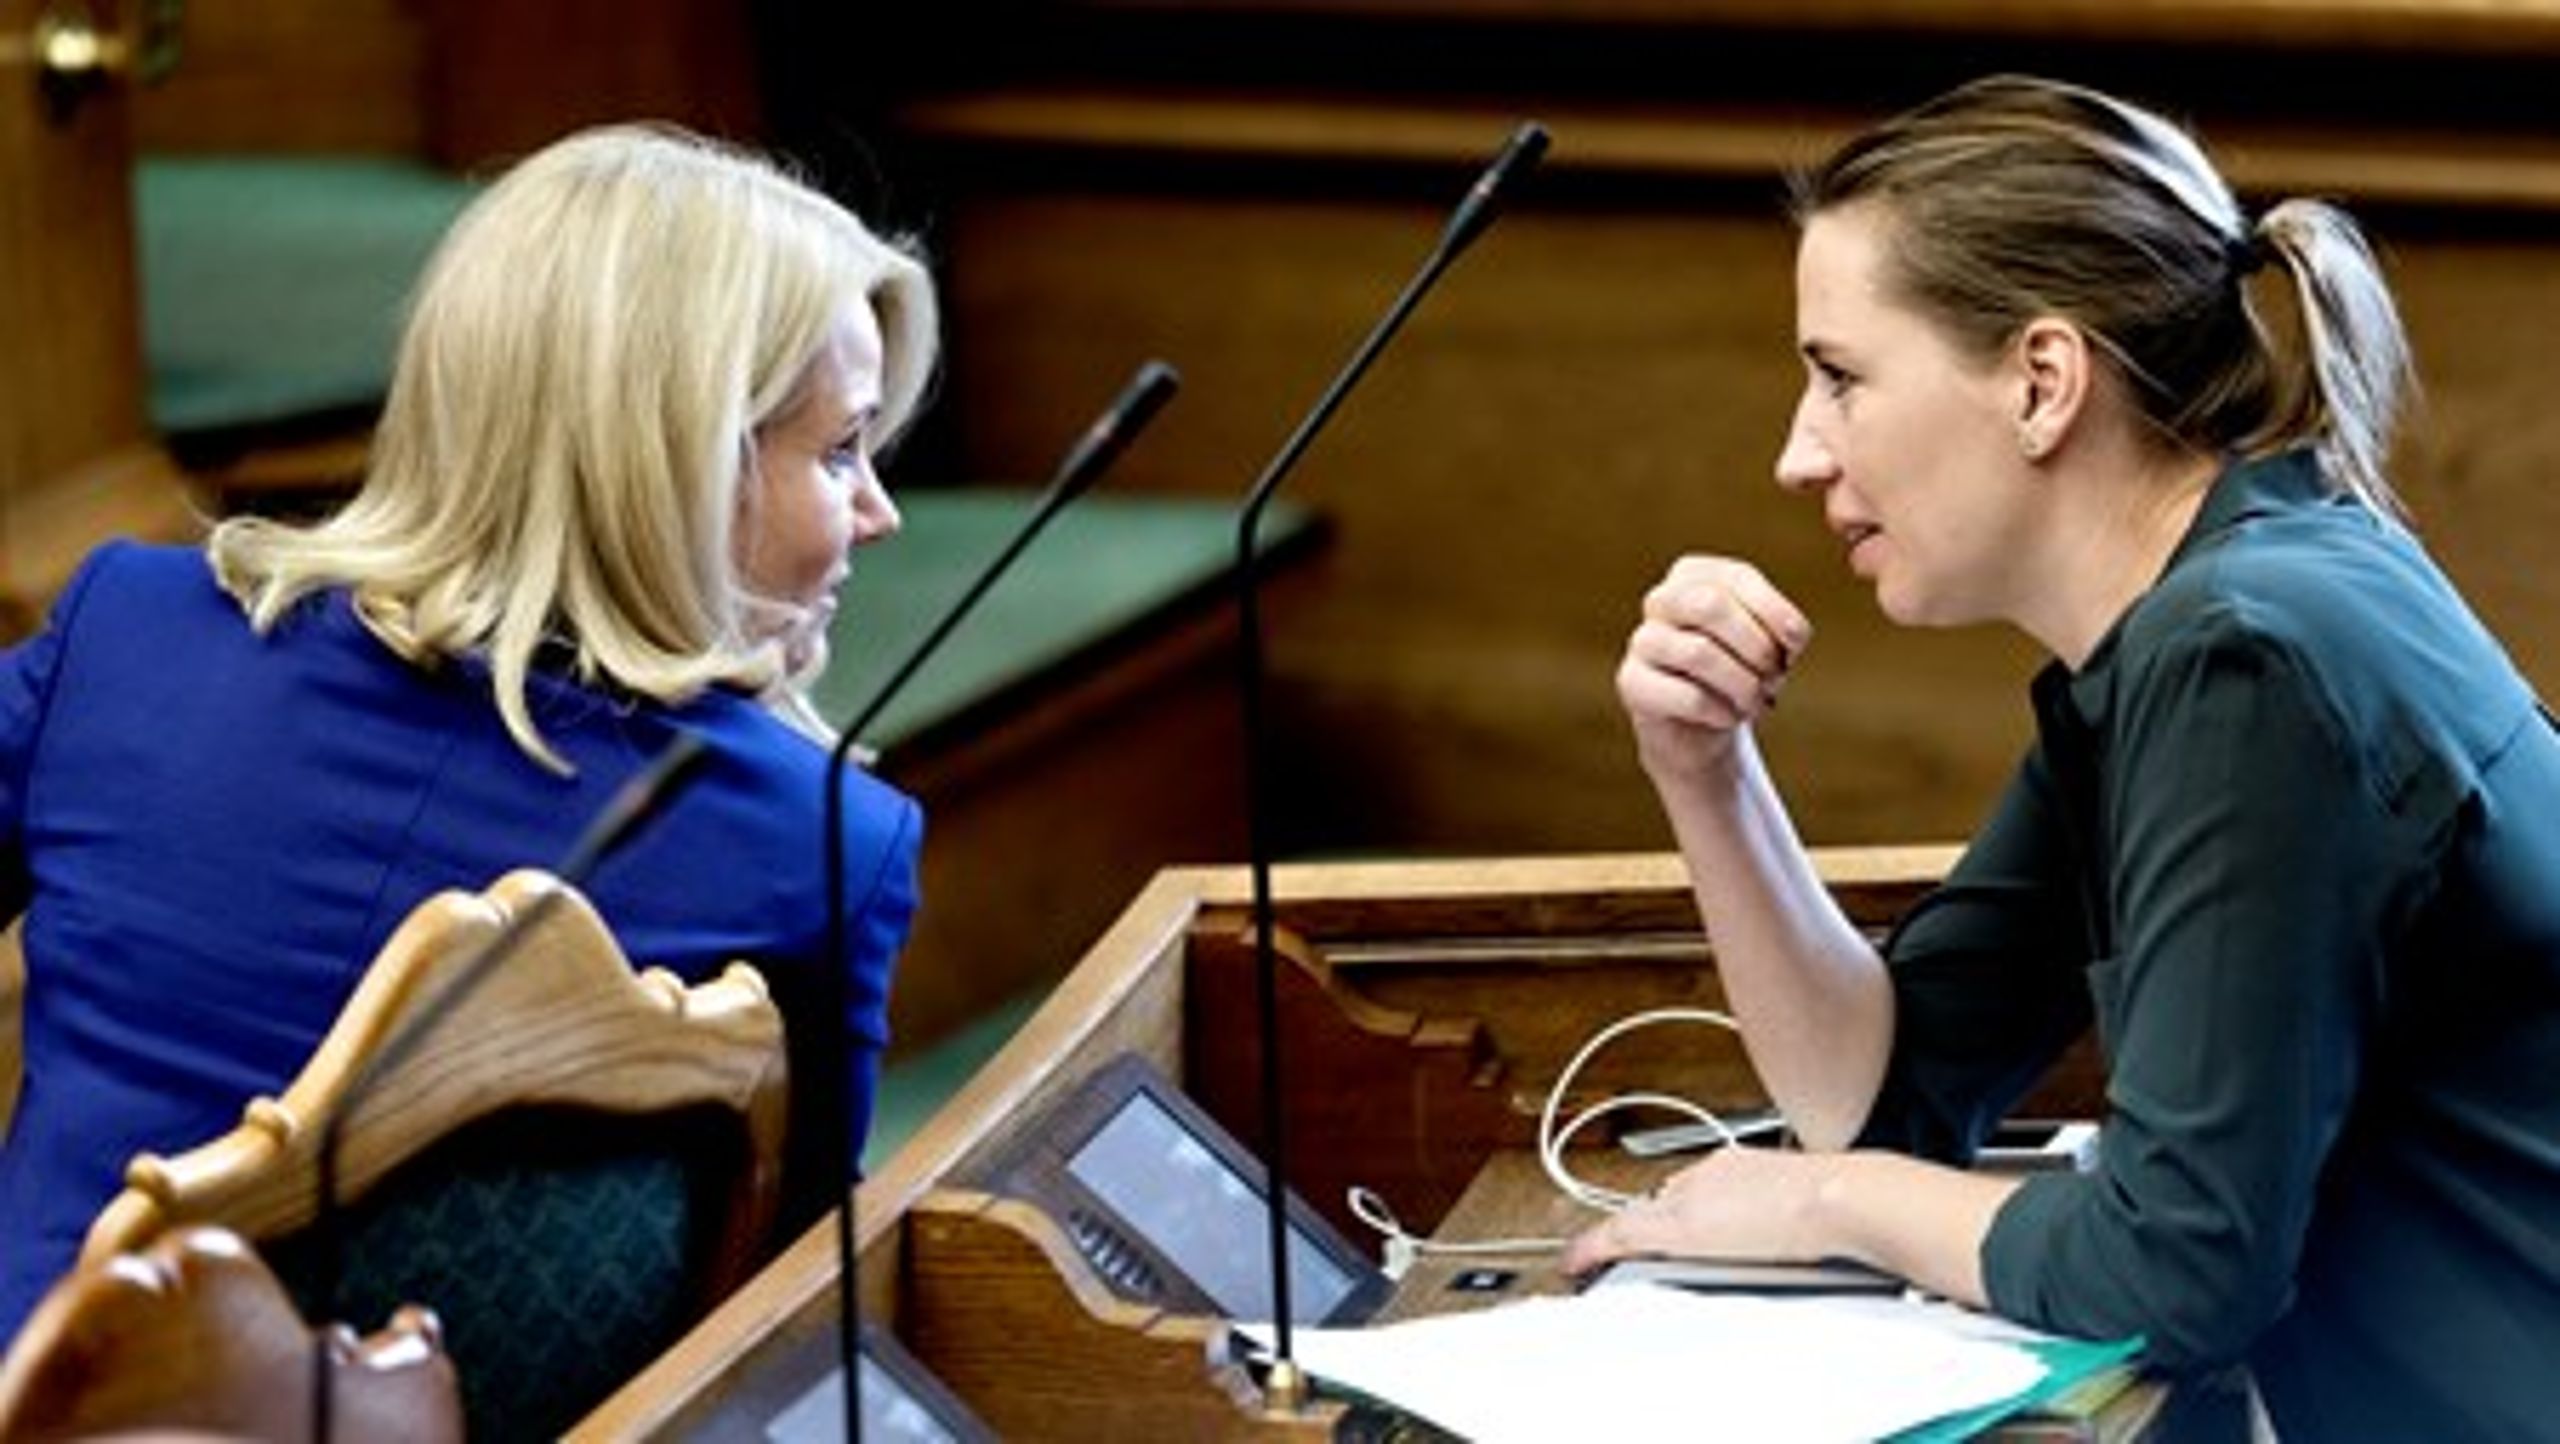 Justitsminister Mette Frederiksen (S) og statsminister Helle Thorning-Schmidt (S) er de mest populære ministre, viser ny måling for Altinget.&nbsp;